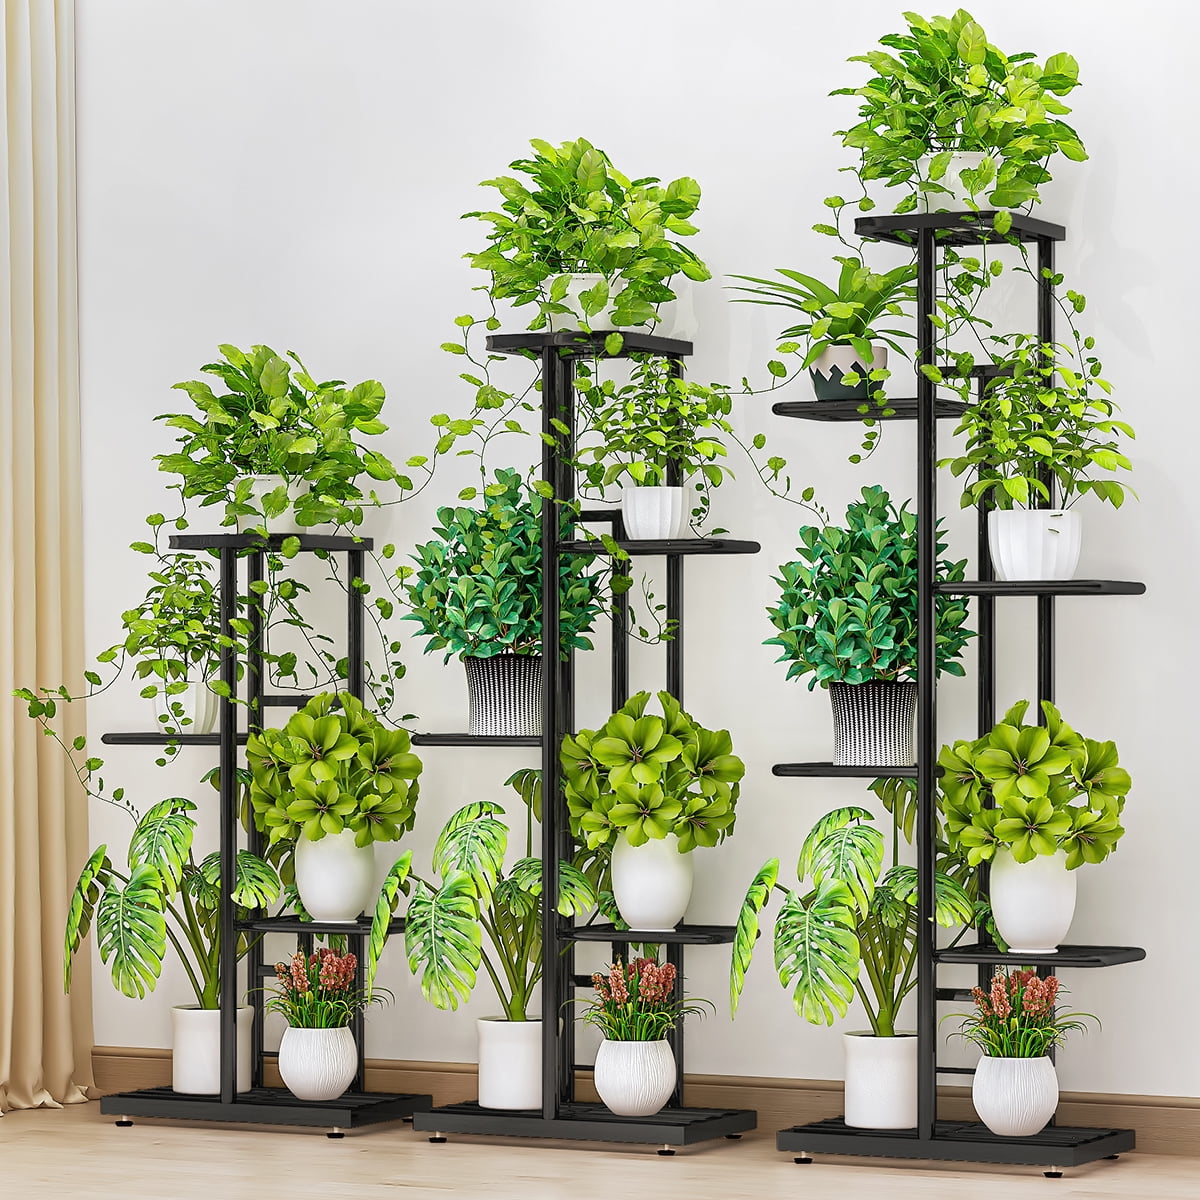 6Tier Steel Plant Stand Flower Pot Display Holder Shelf Home Garden Balcony Rack 